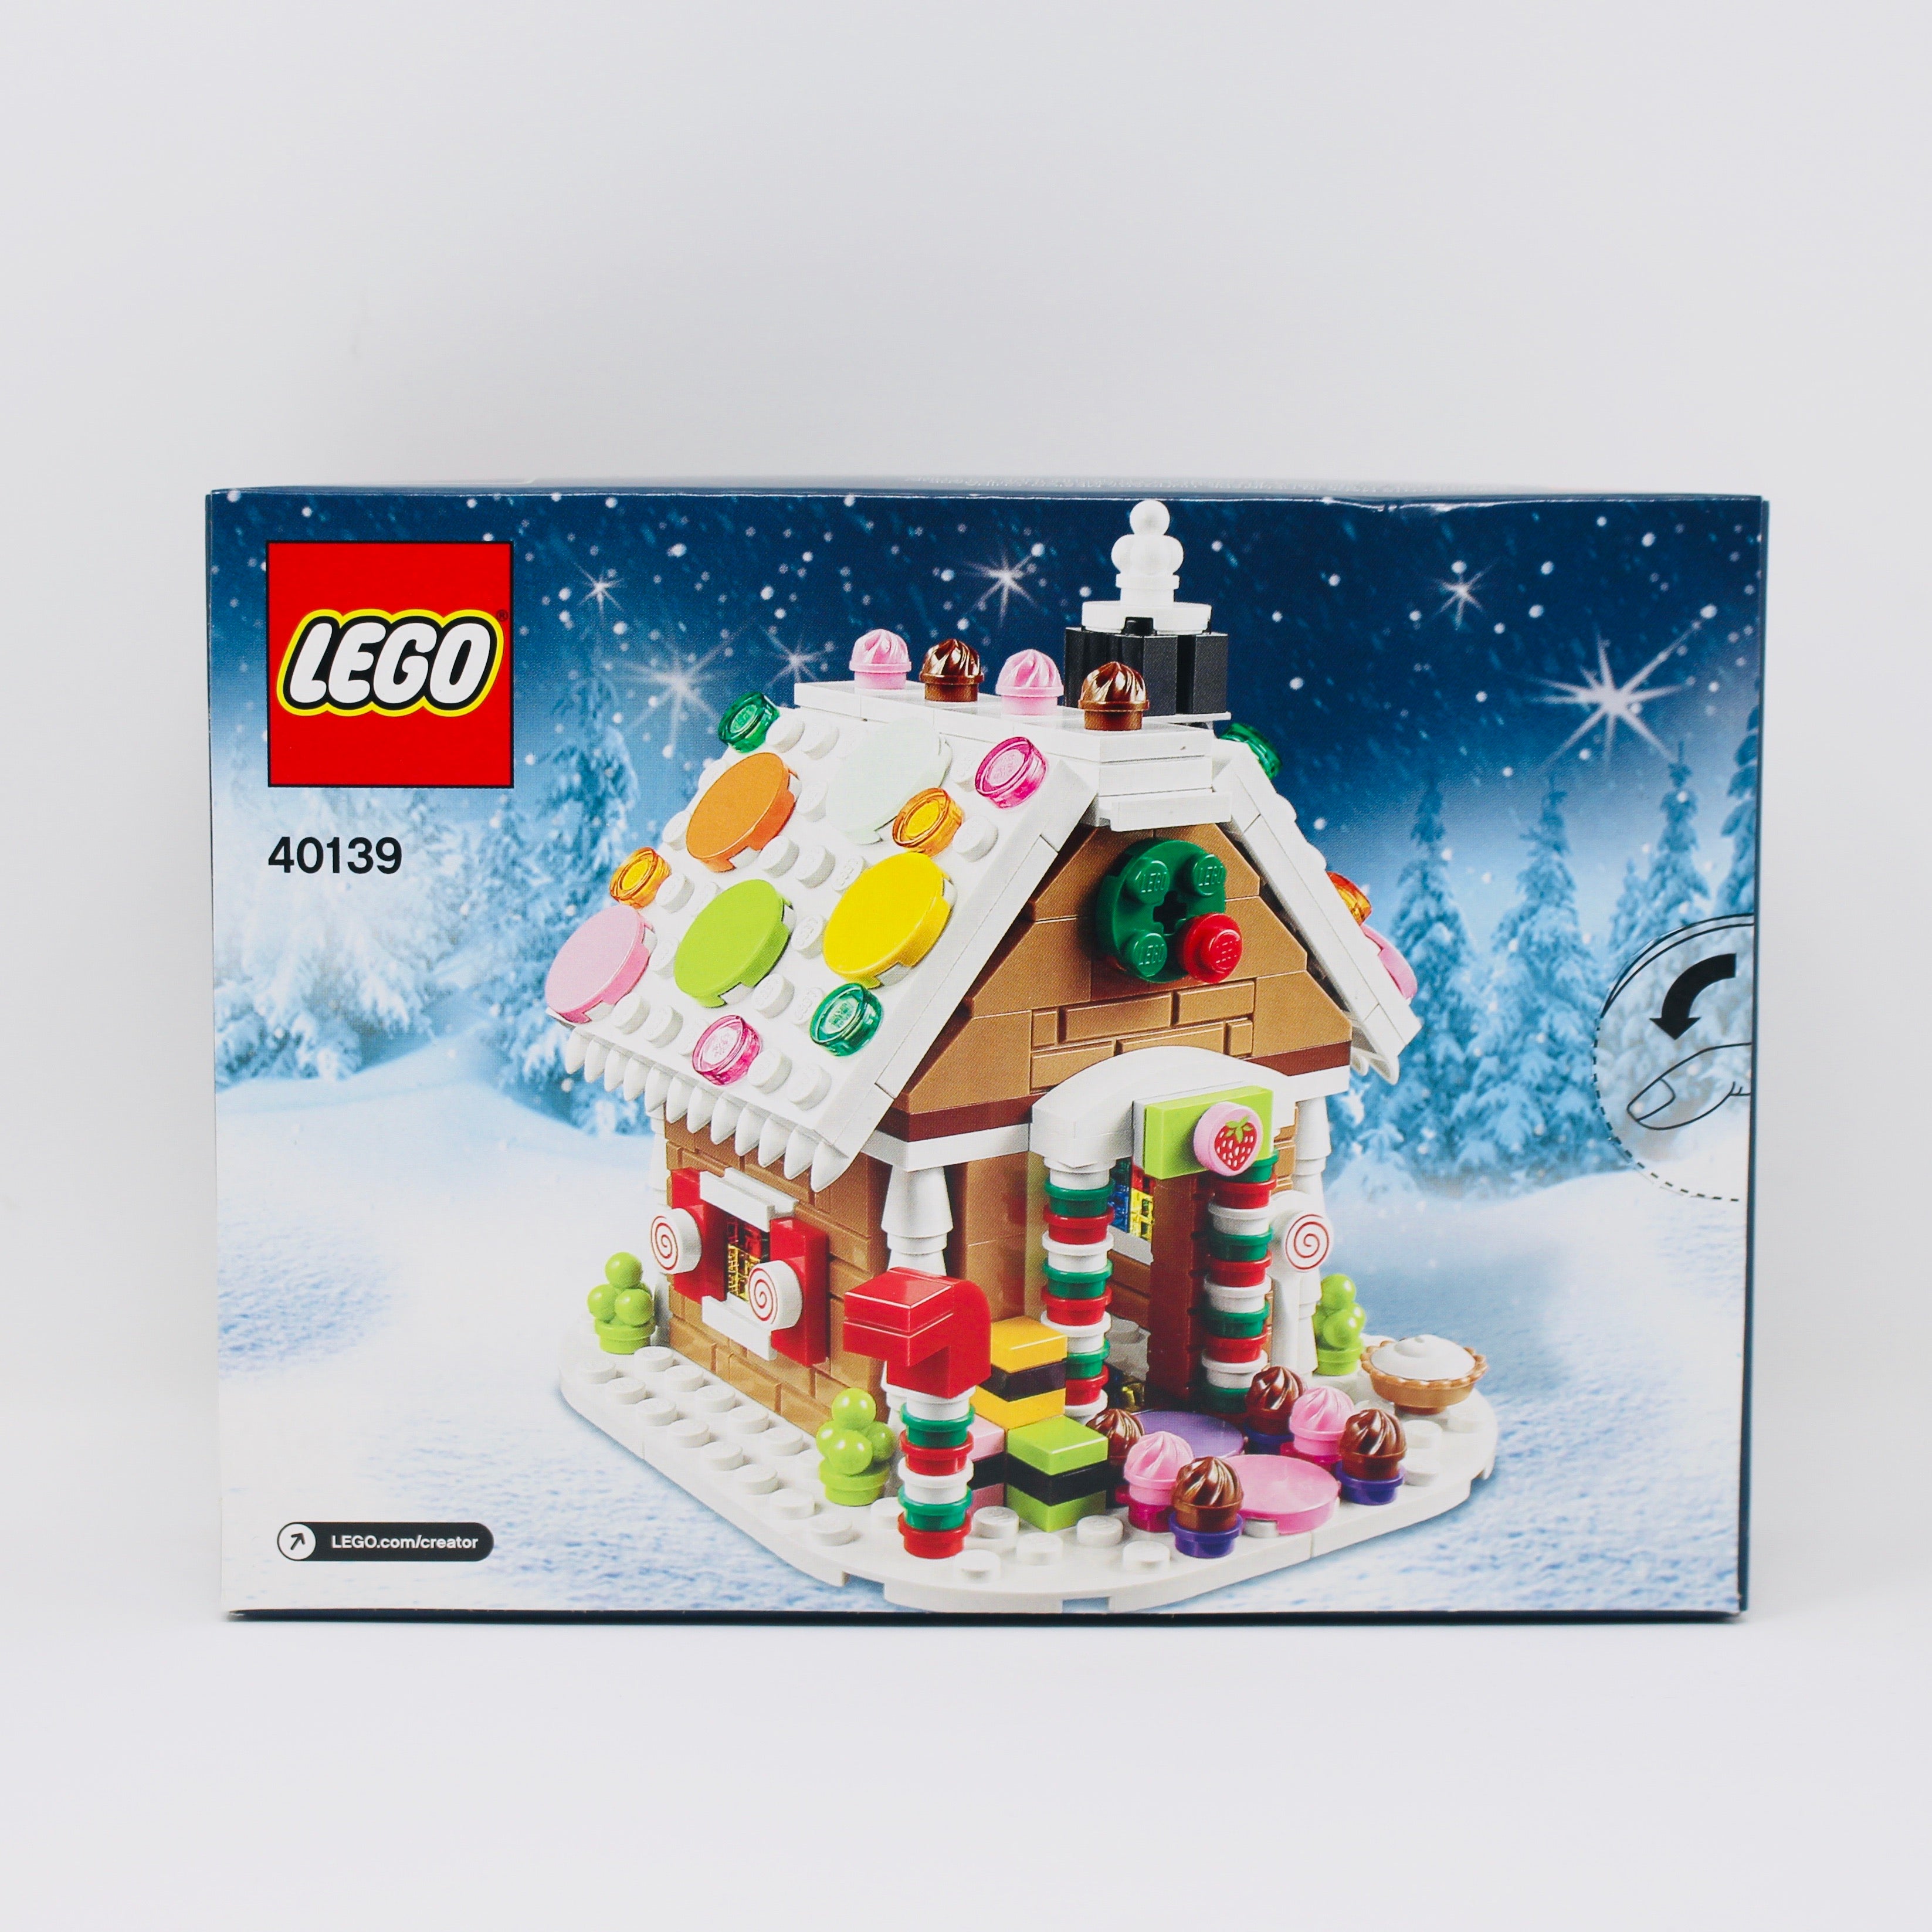 Retired Set 40139 LEGO Gingerbread House